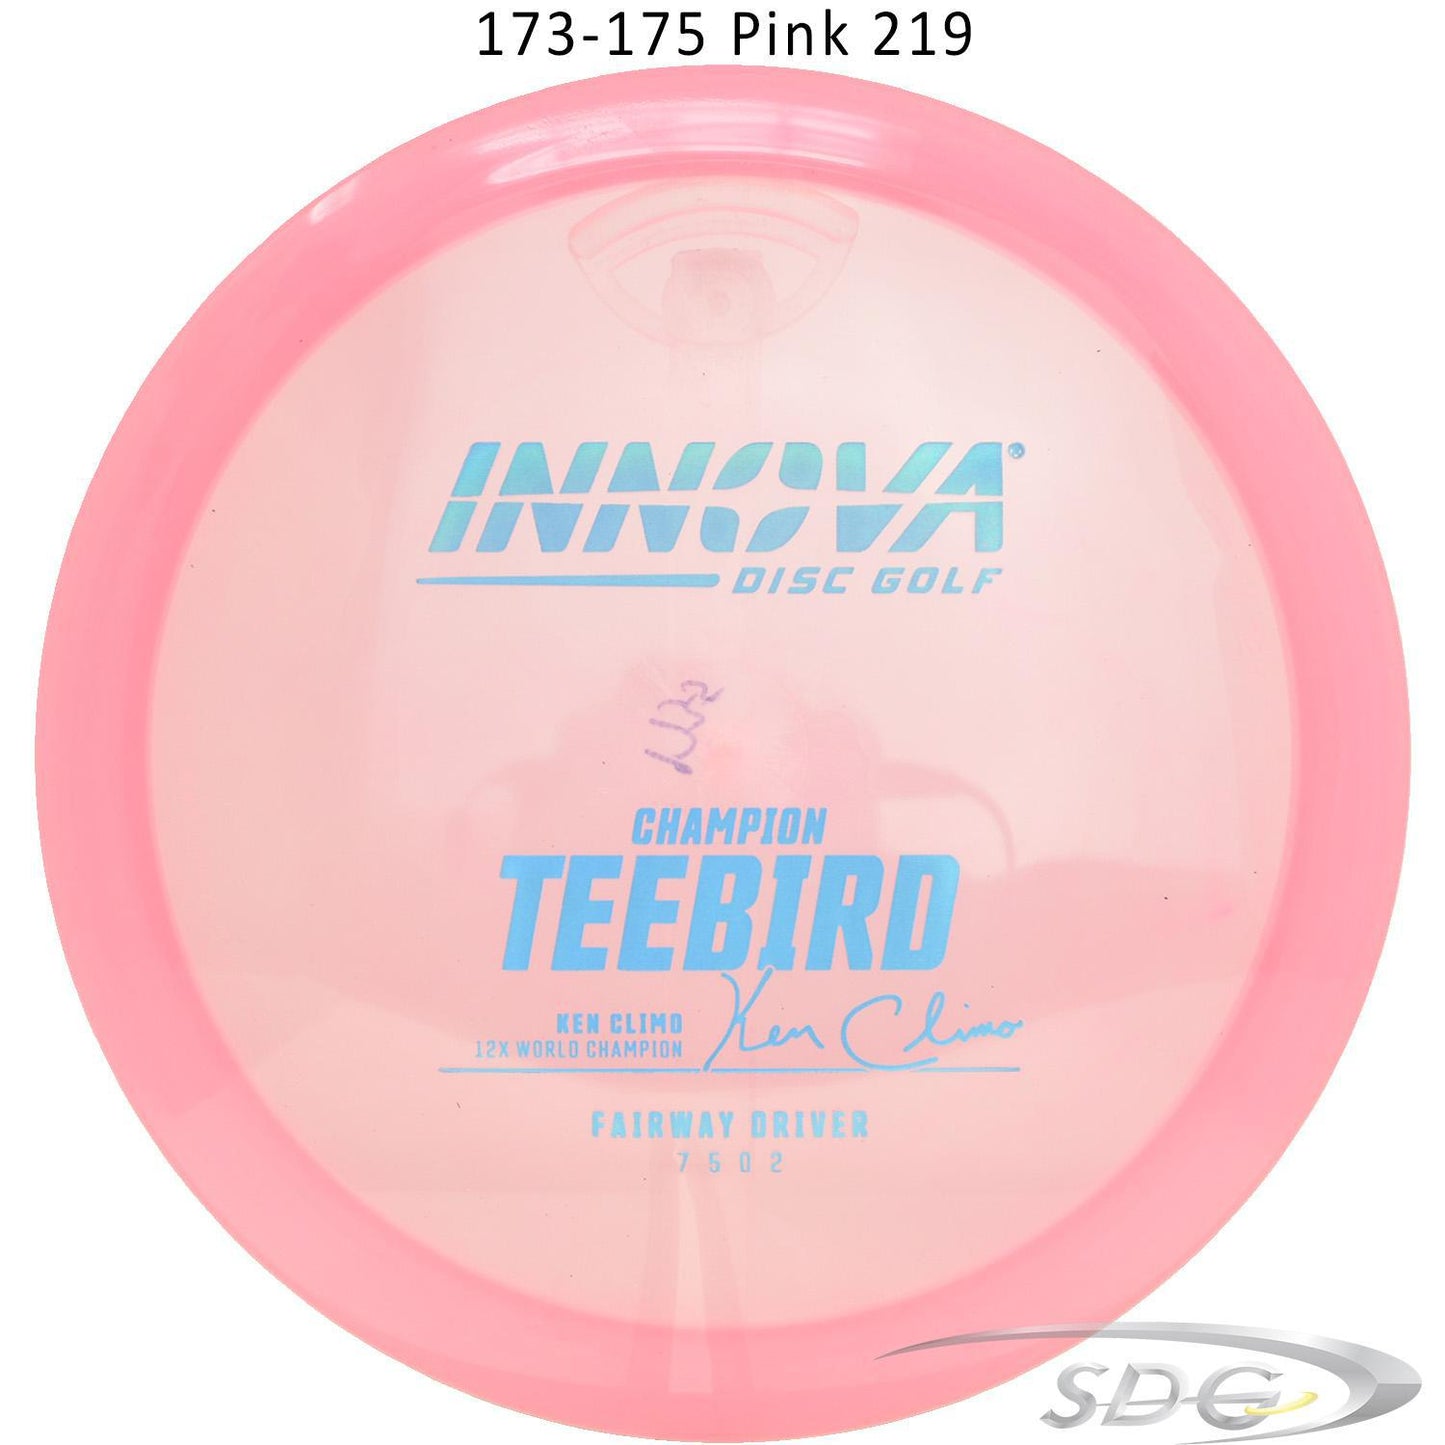 innova-champion-teebird-disc-golf-fairway-driver 173-175 Pink 219 